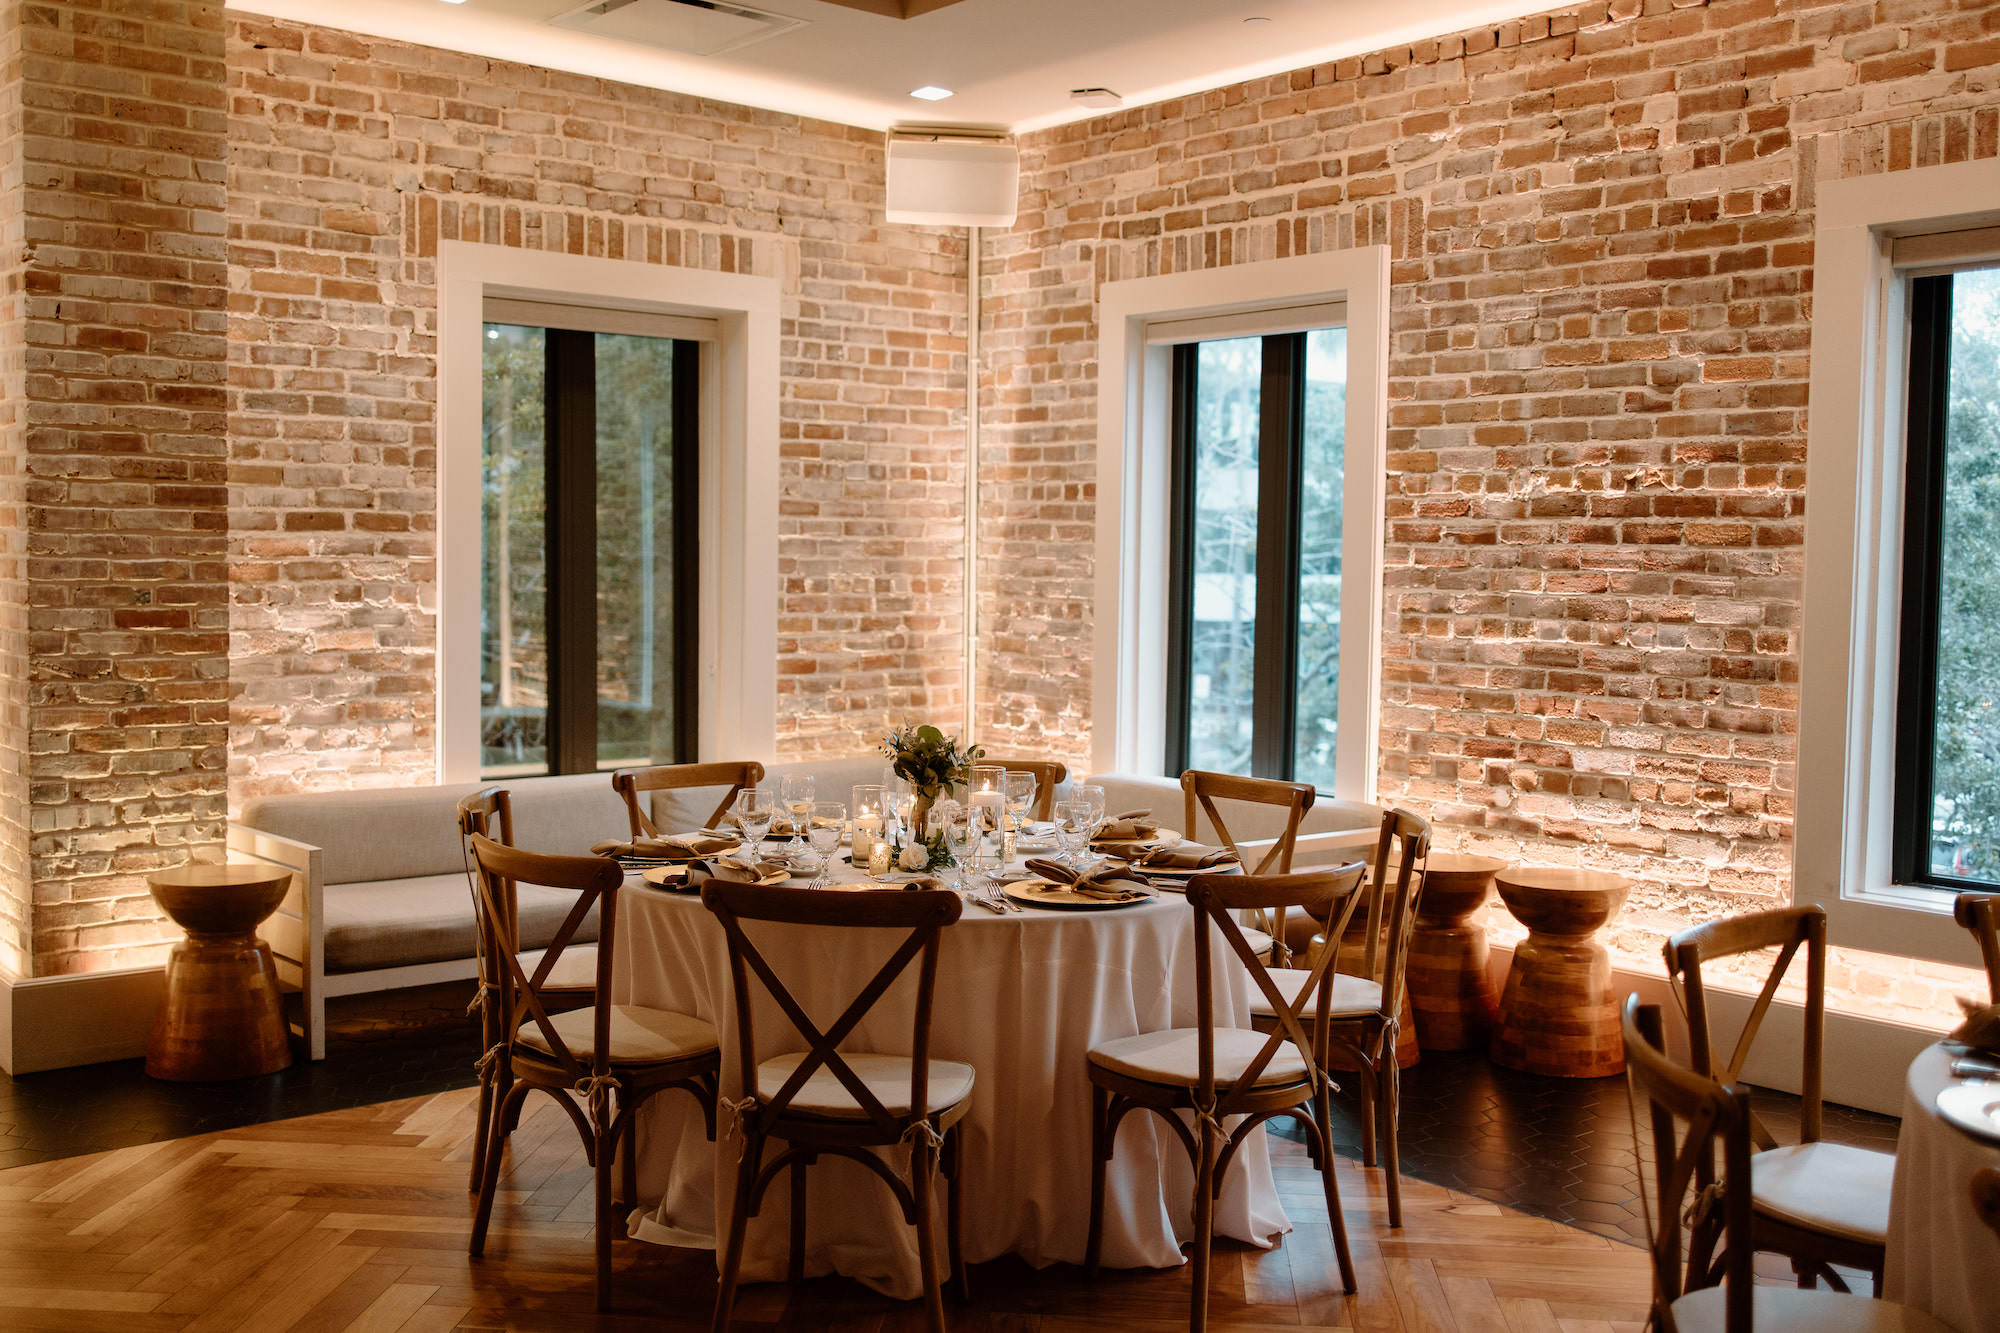 Modern Exposed Brick Indoor Wedding Reception | St Petersburg Venue Red Mesa Events